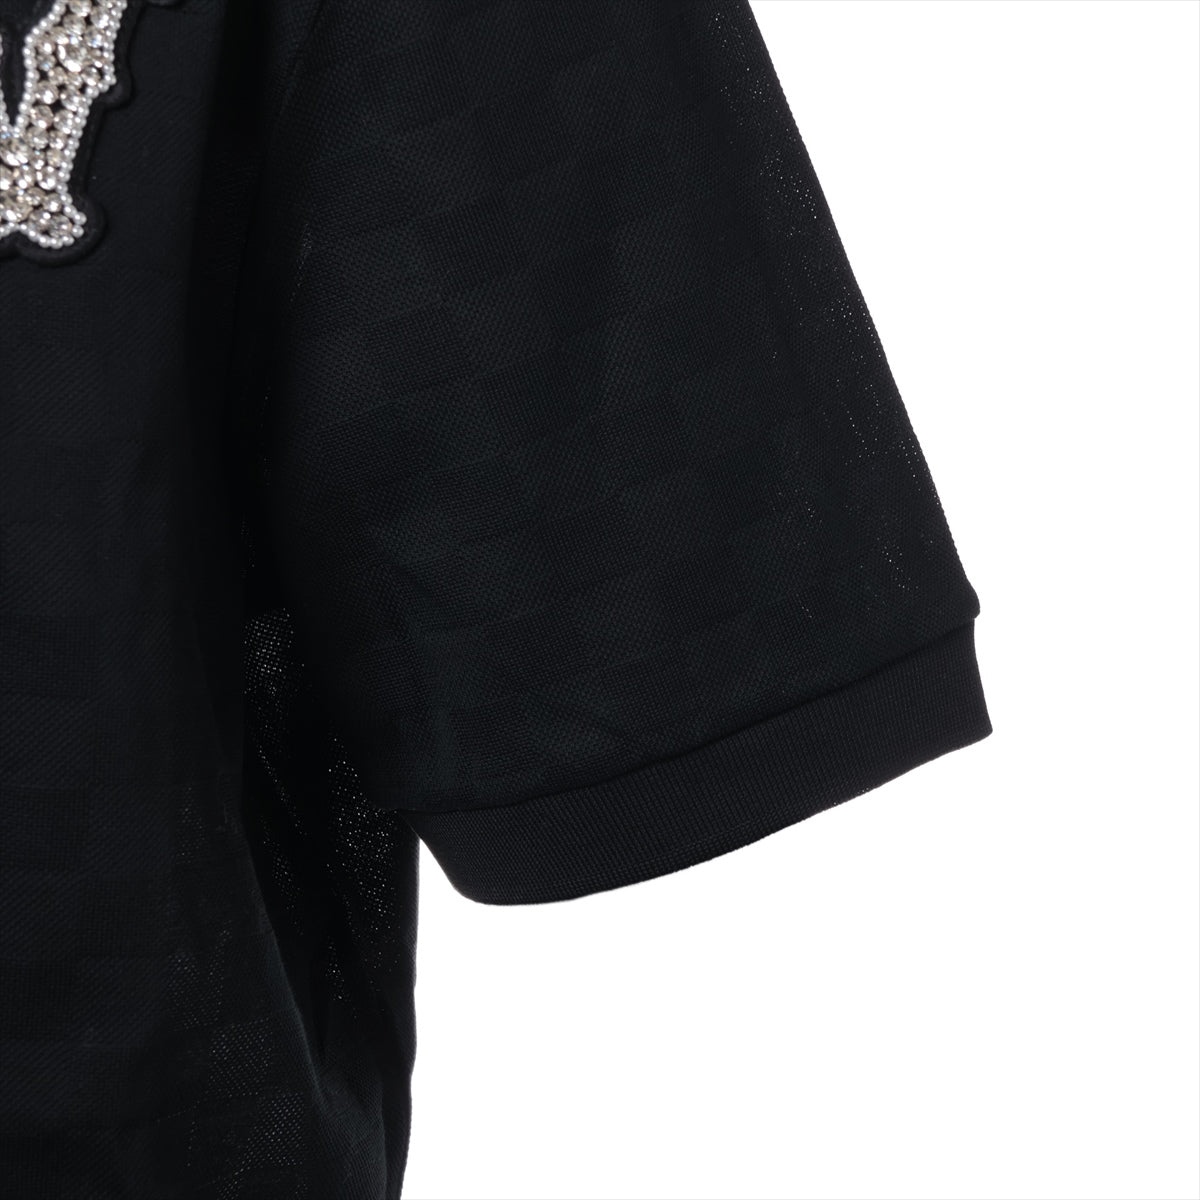 Louis Vuitton 24SS Cotton Polo shirt XL Men's Black  RM241 1AFJEN COTTON PIQUE POLO WITH EMBROIDED LV PATCH